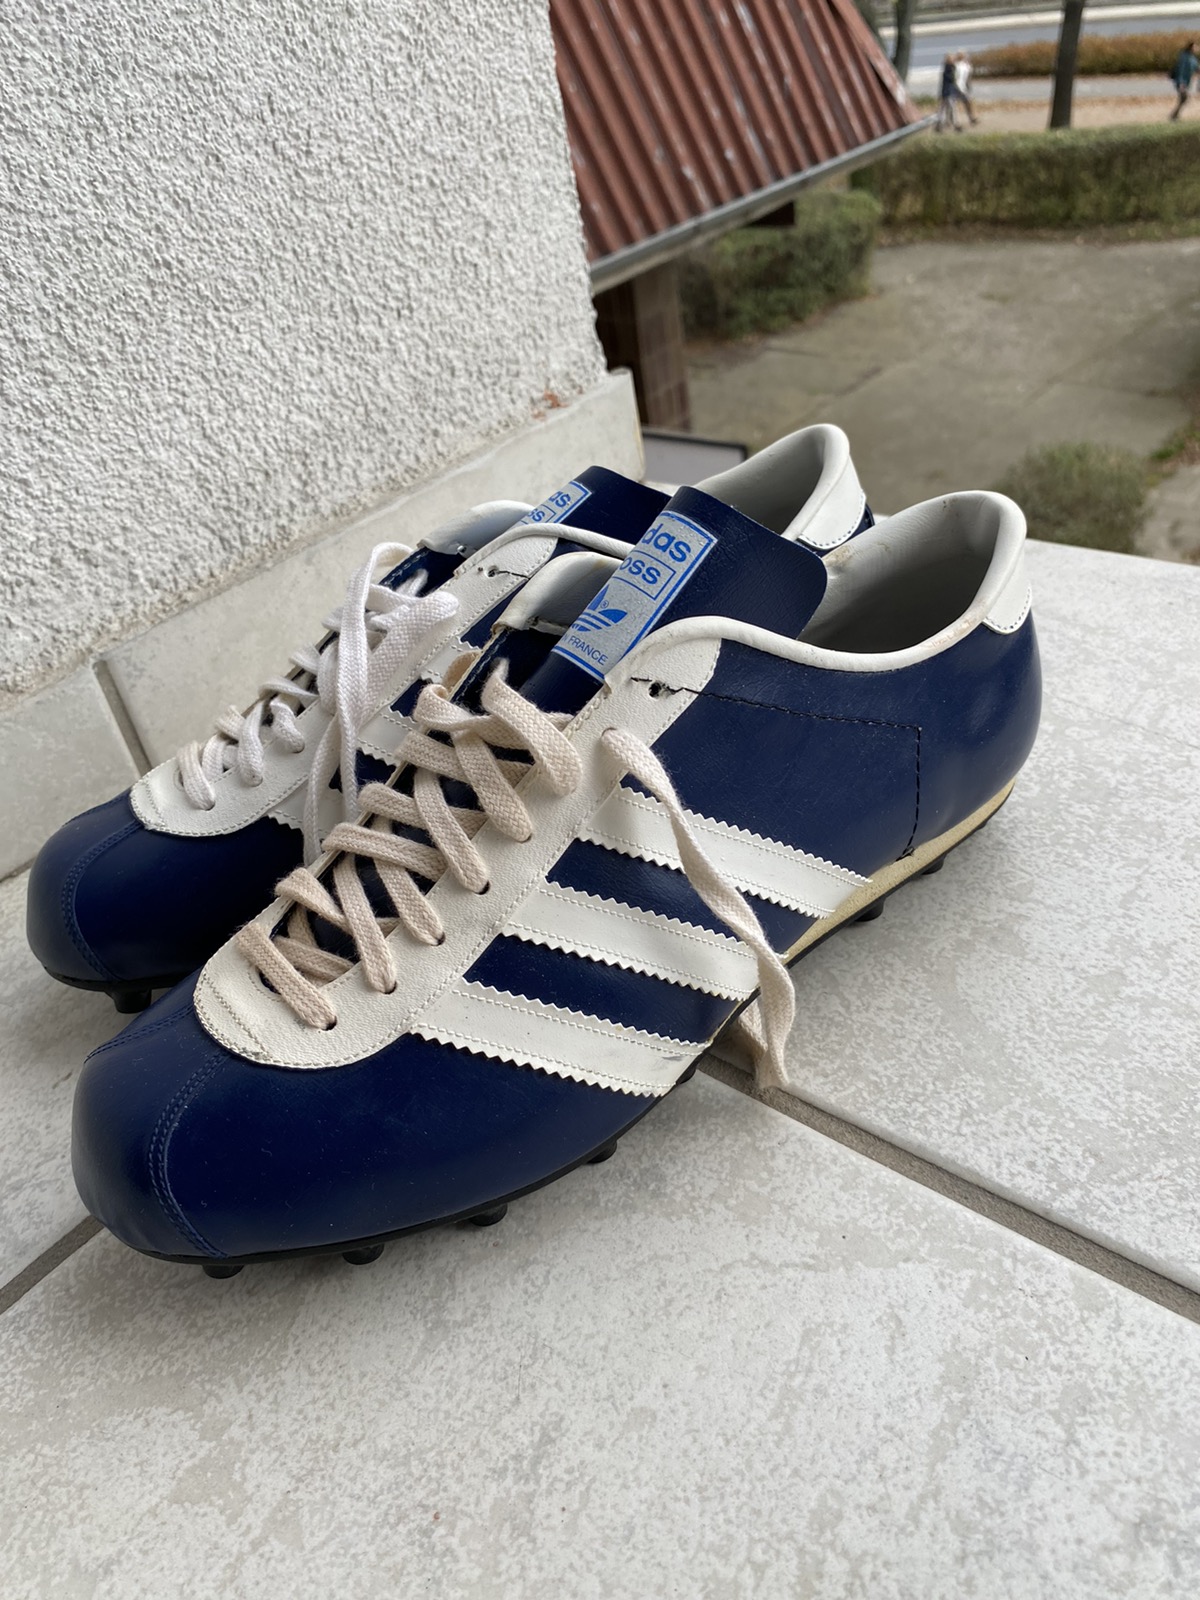 Adidas Cross football boots very rare 1970-80s - 4